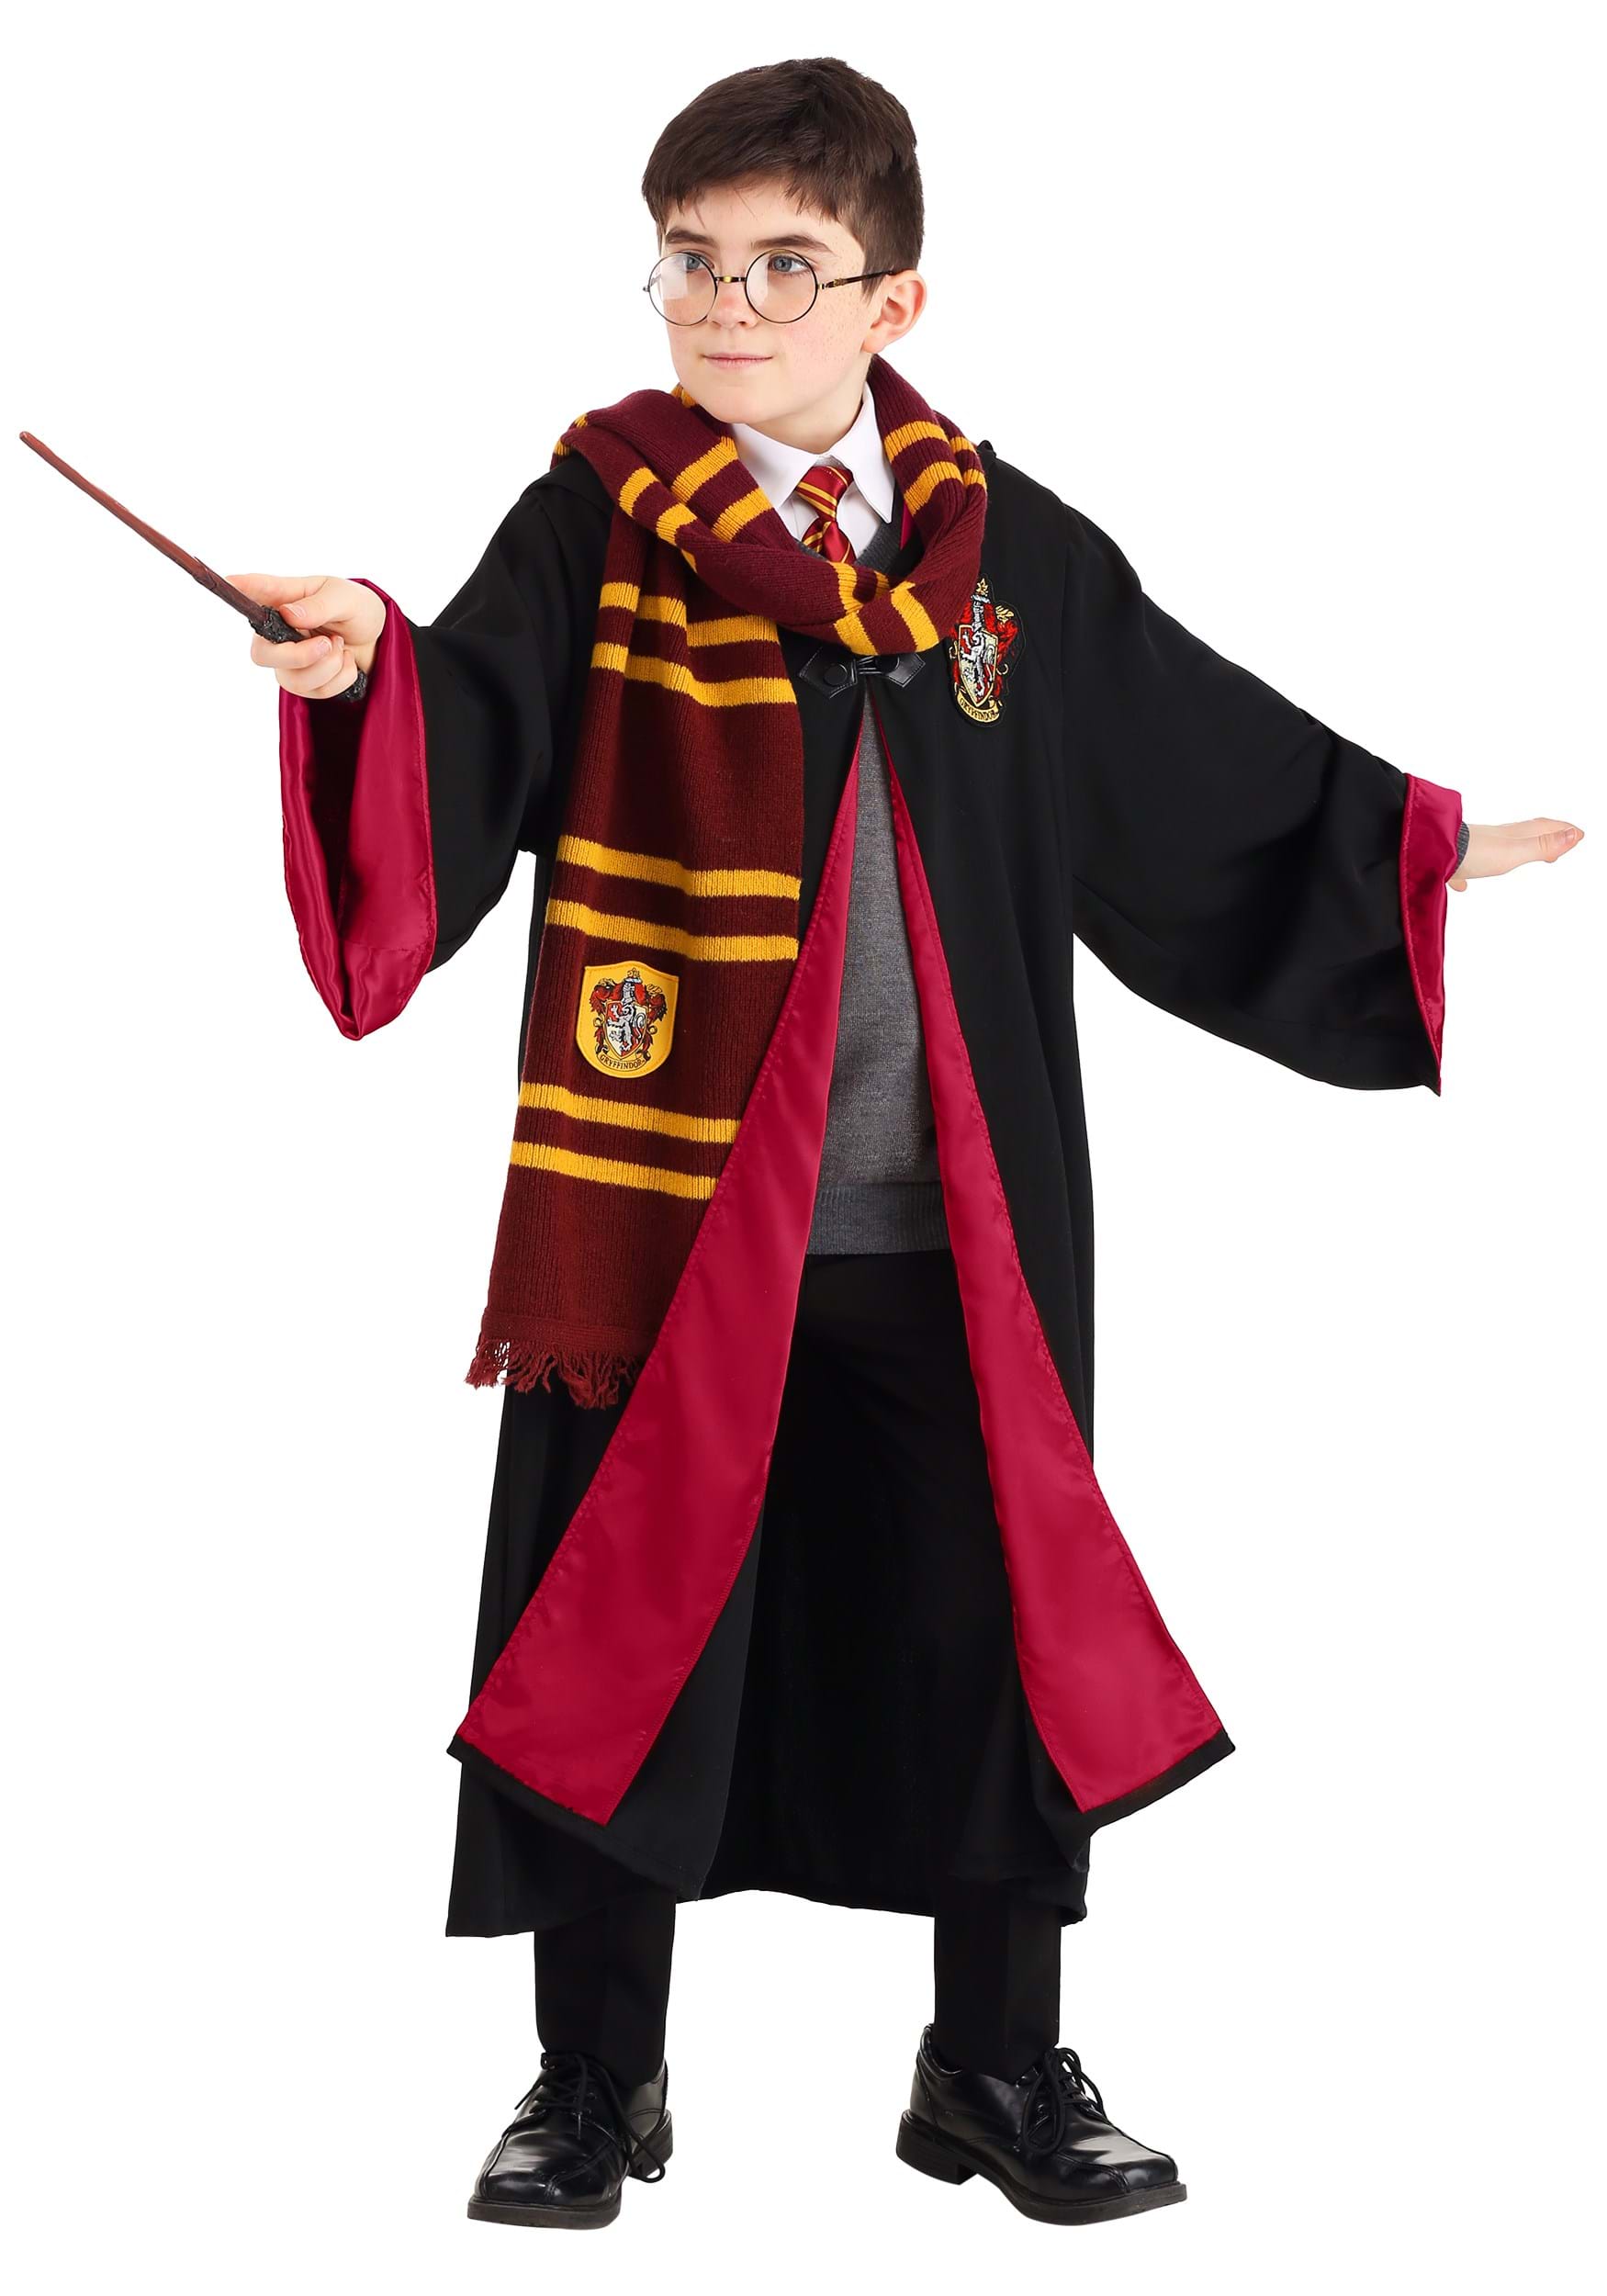 Harry potter costumes - shoppenelo